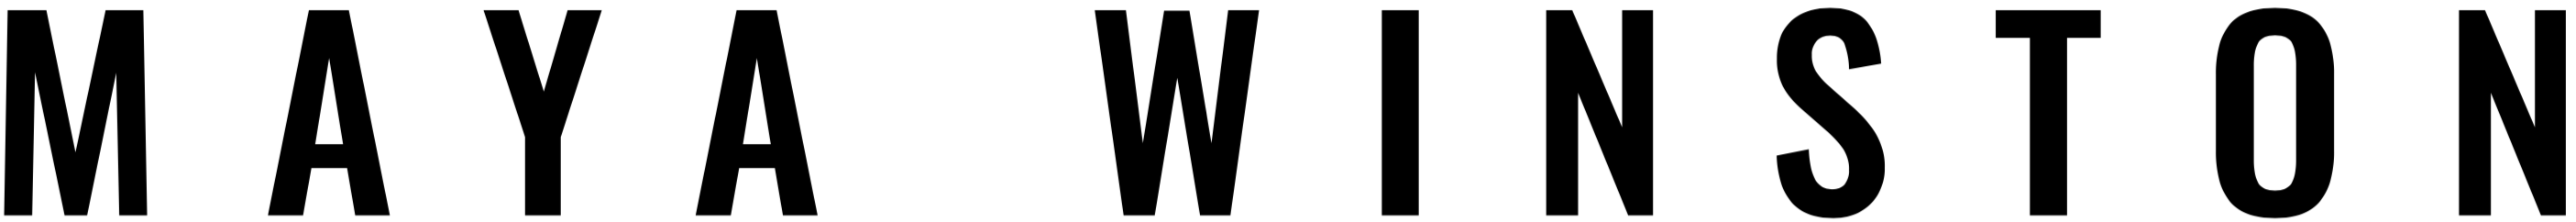 File:Louis Vuitton logo.png - Wikipedia